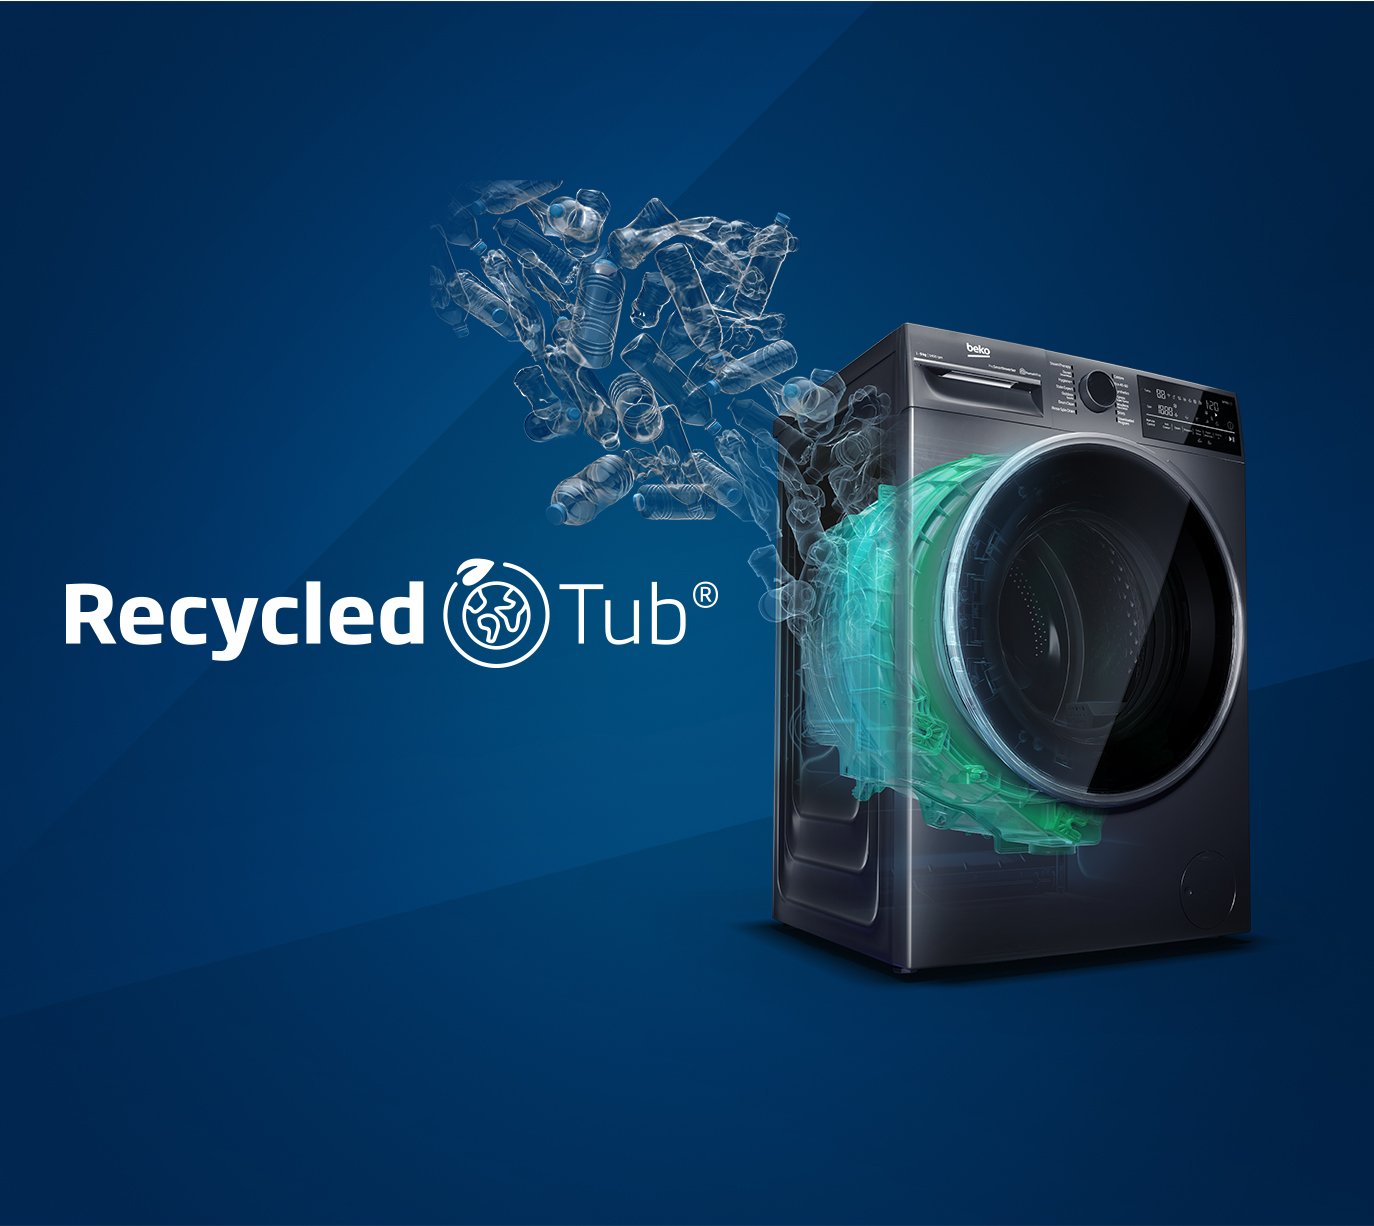 RecycledTub® Washer Dryers